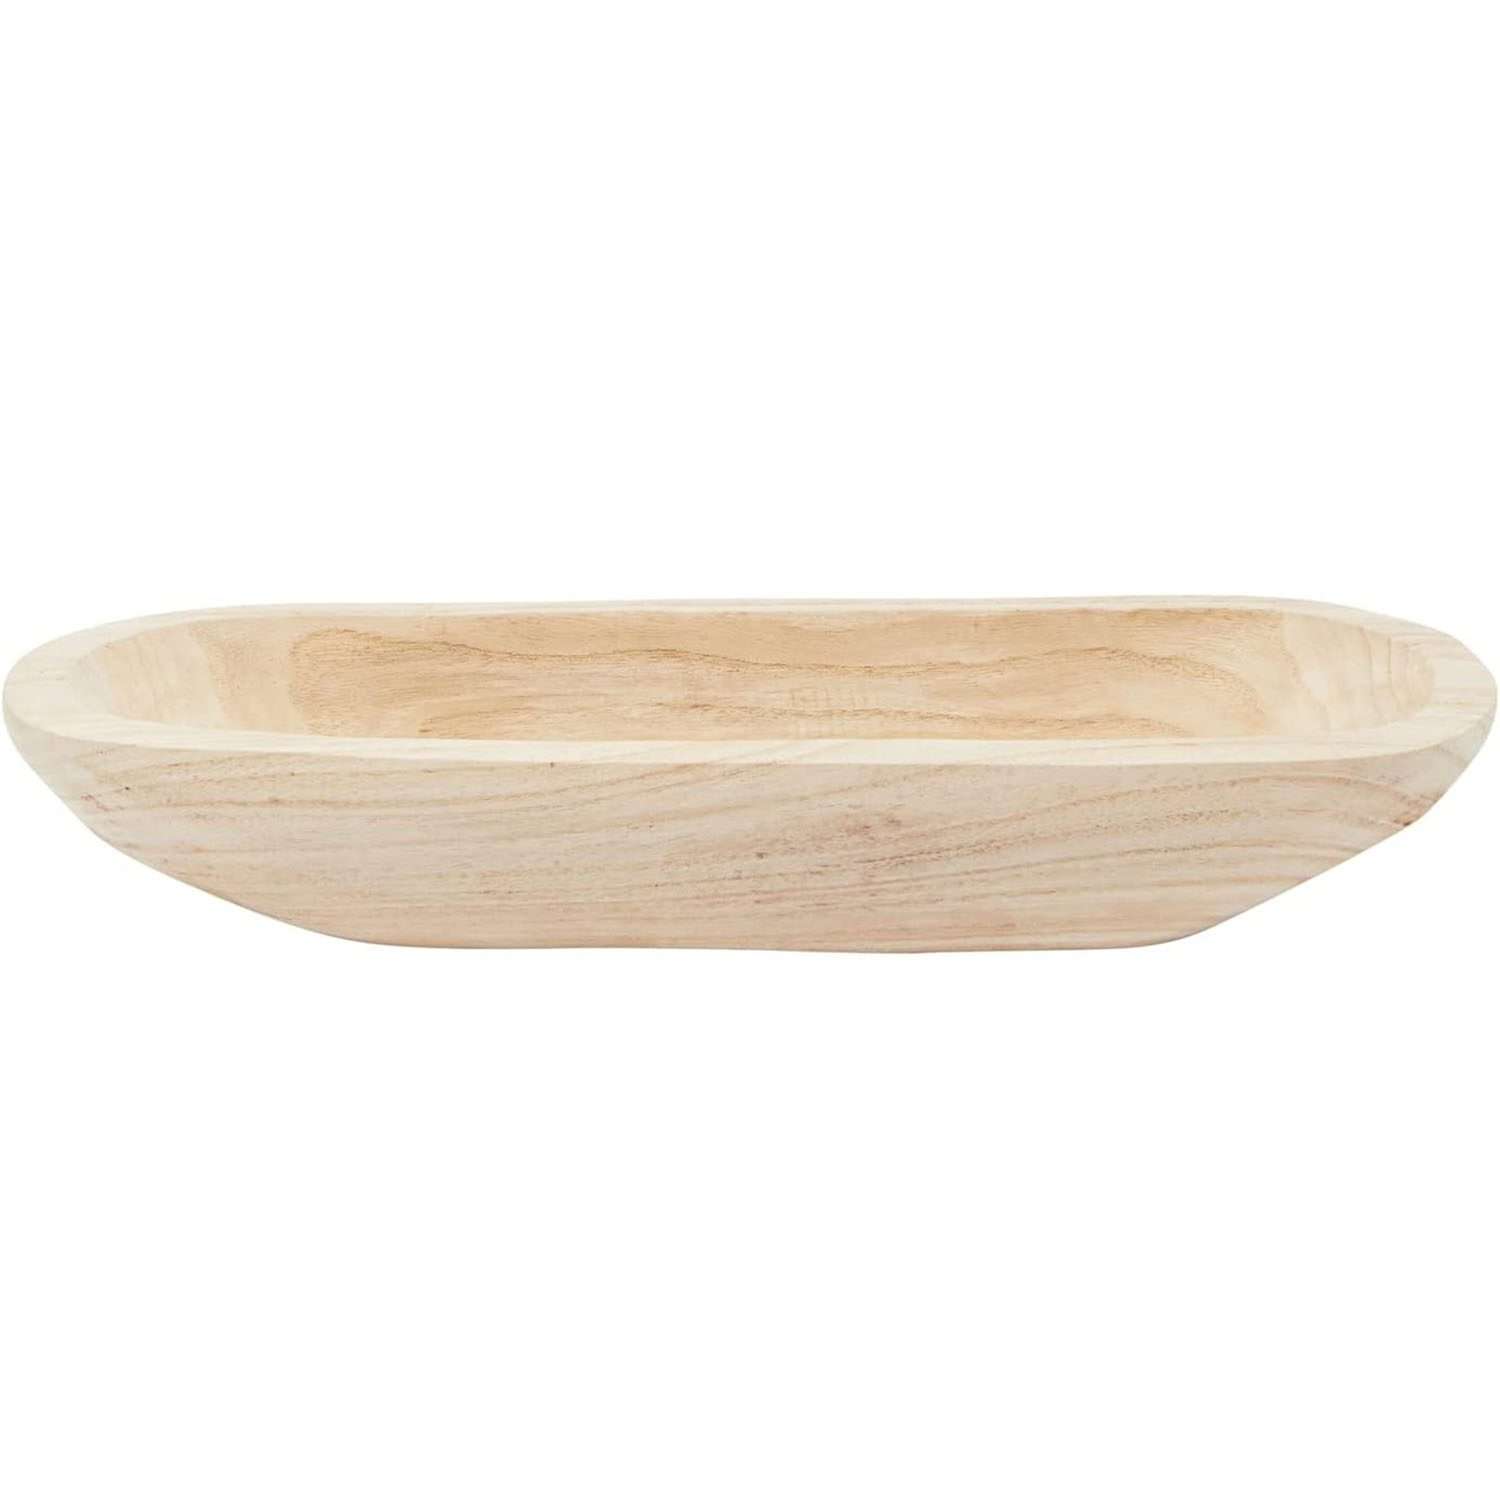 Handmade Wooden Dough Bowls for Decor | Wooden Bowls multipurpose